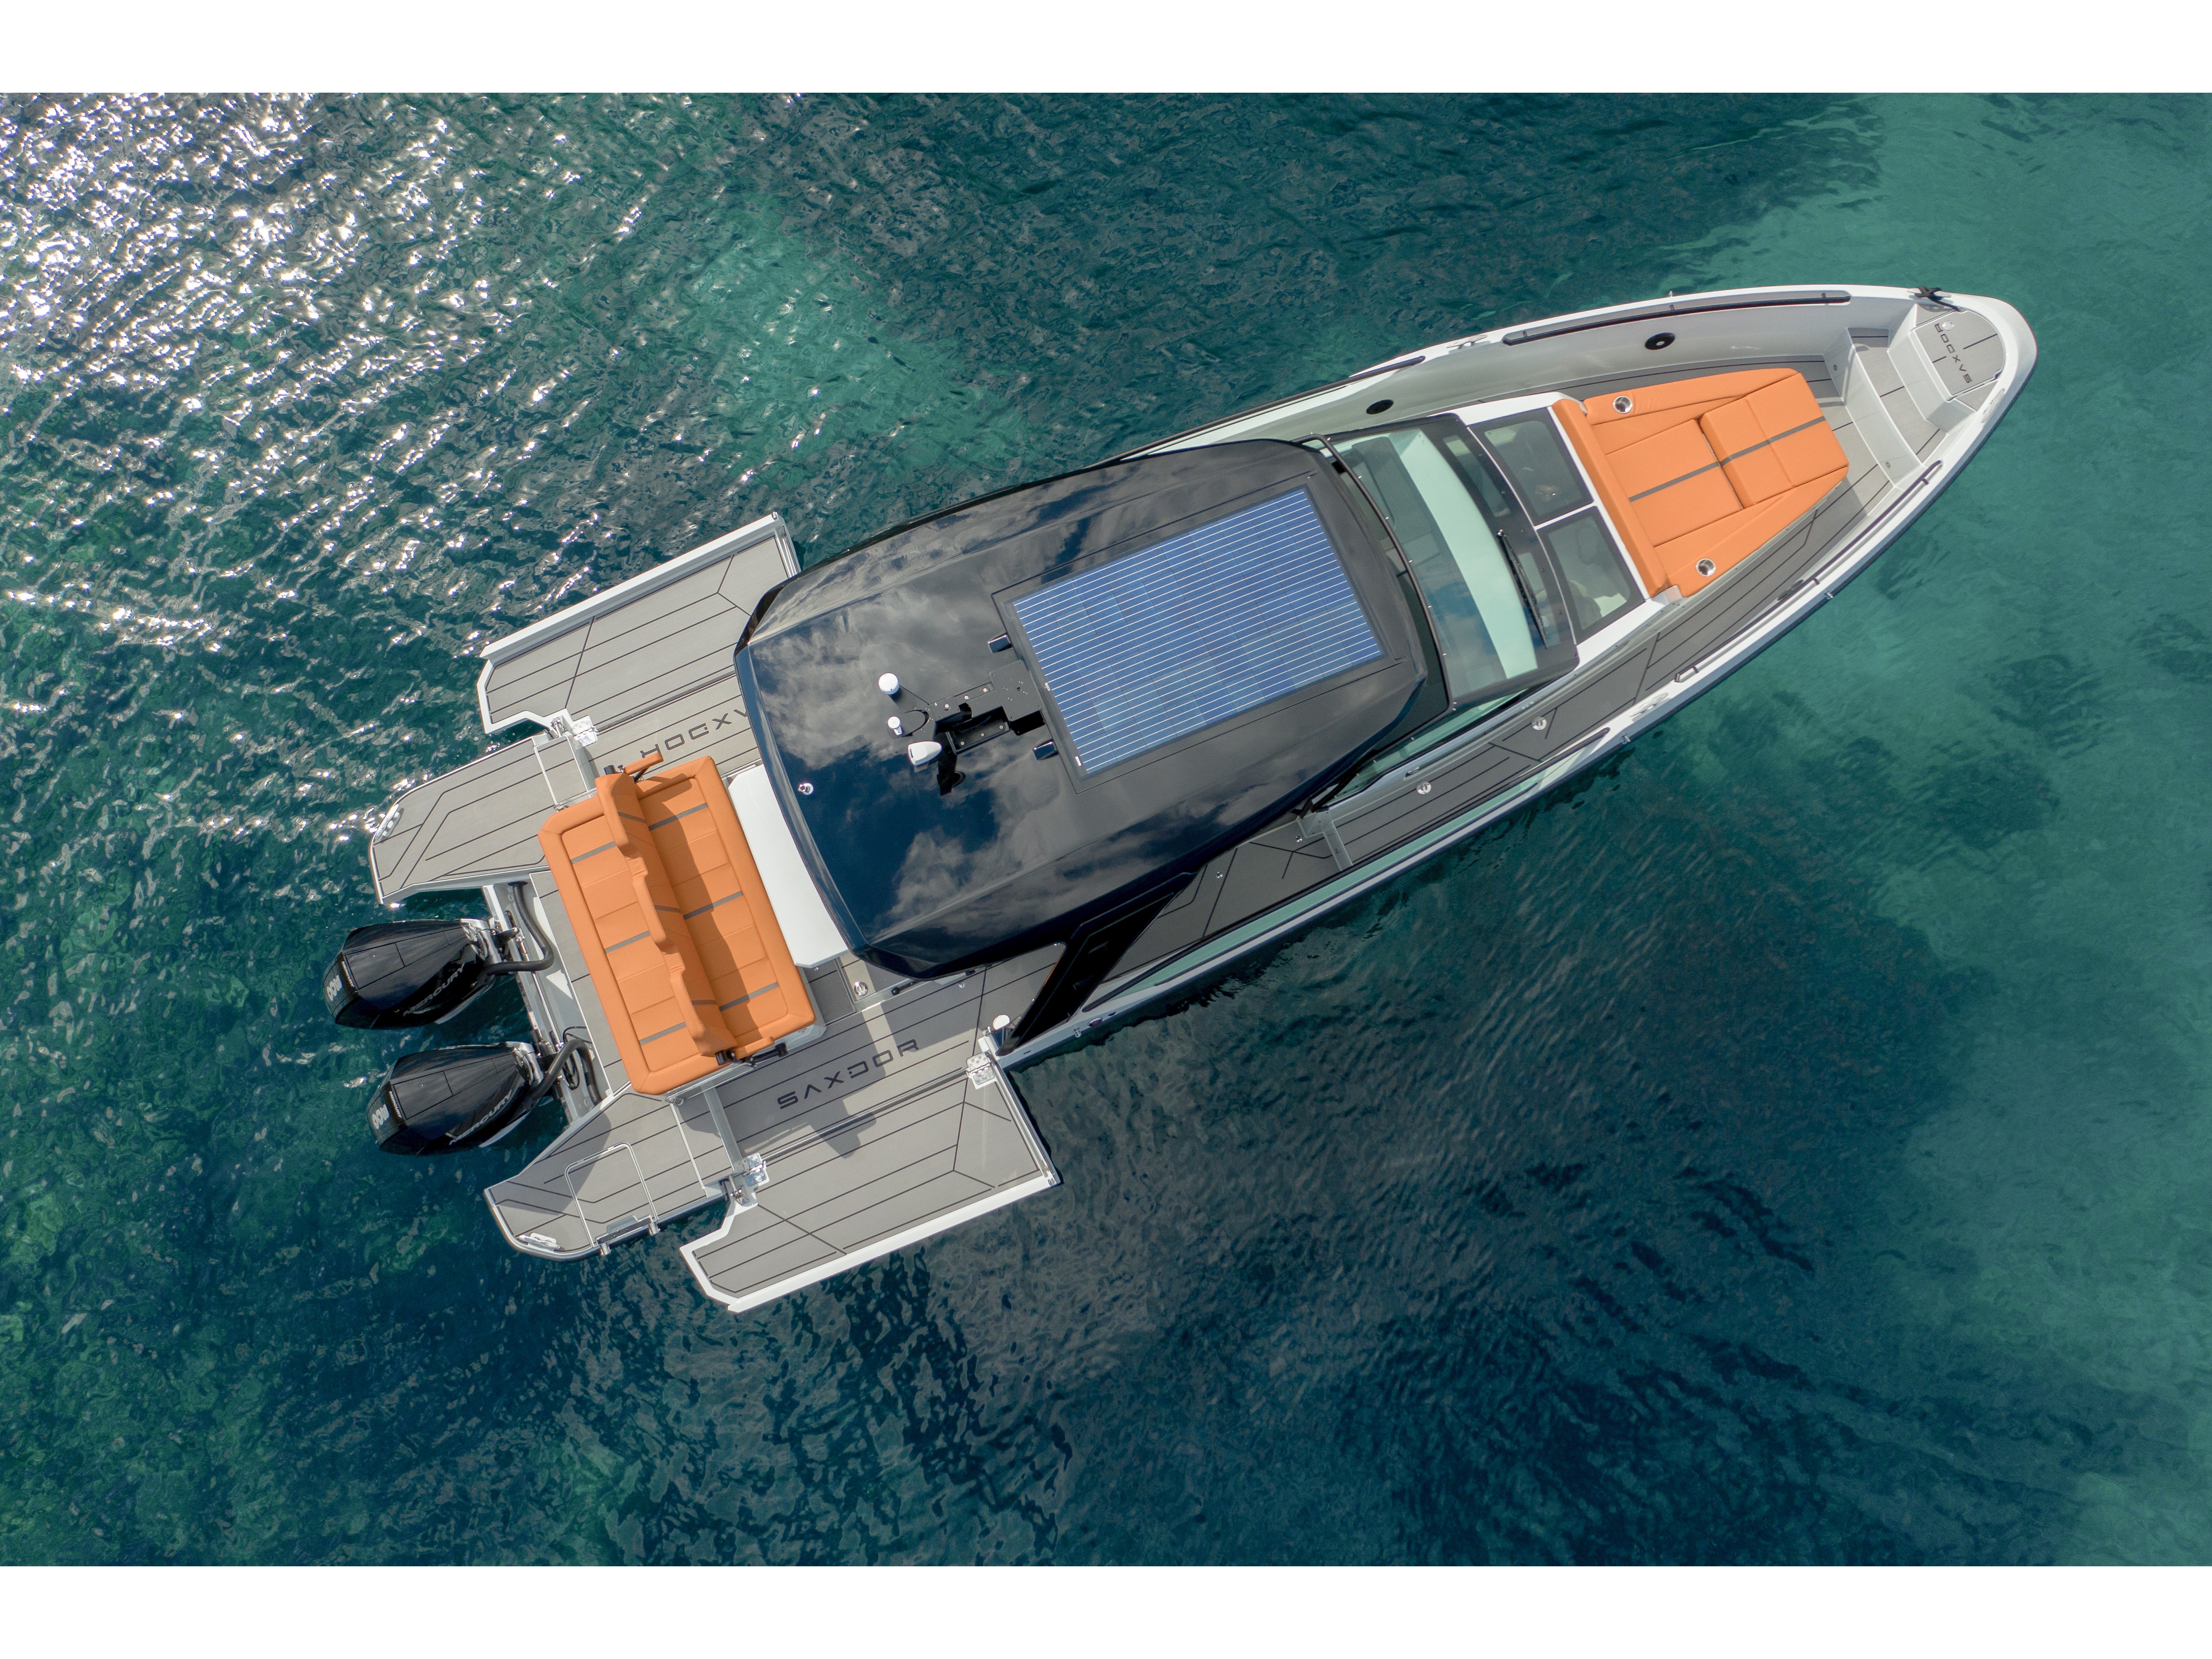 Saxdor 320 GTO - Gulet rental worldwide & Boat hire in Greece Athens and Saronic Gulf Athens Hellinikon Agios Kosmas Marina 1